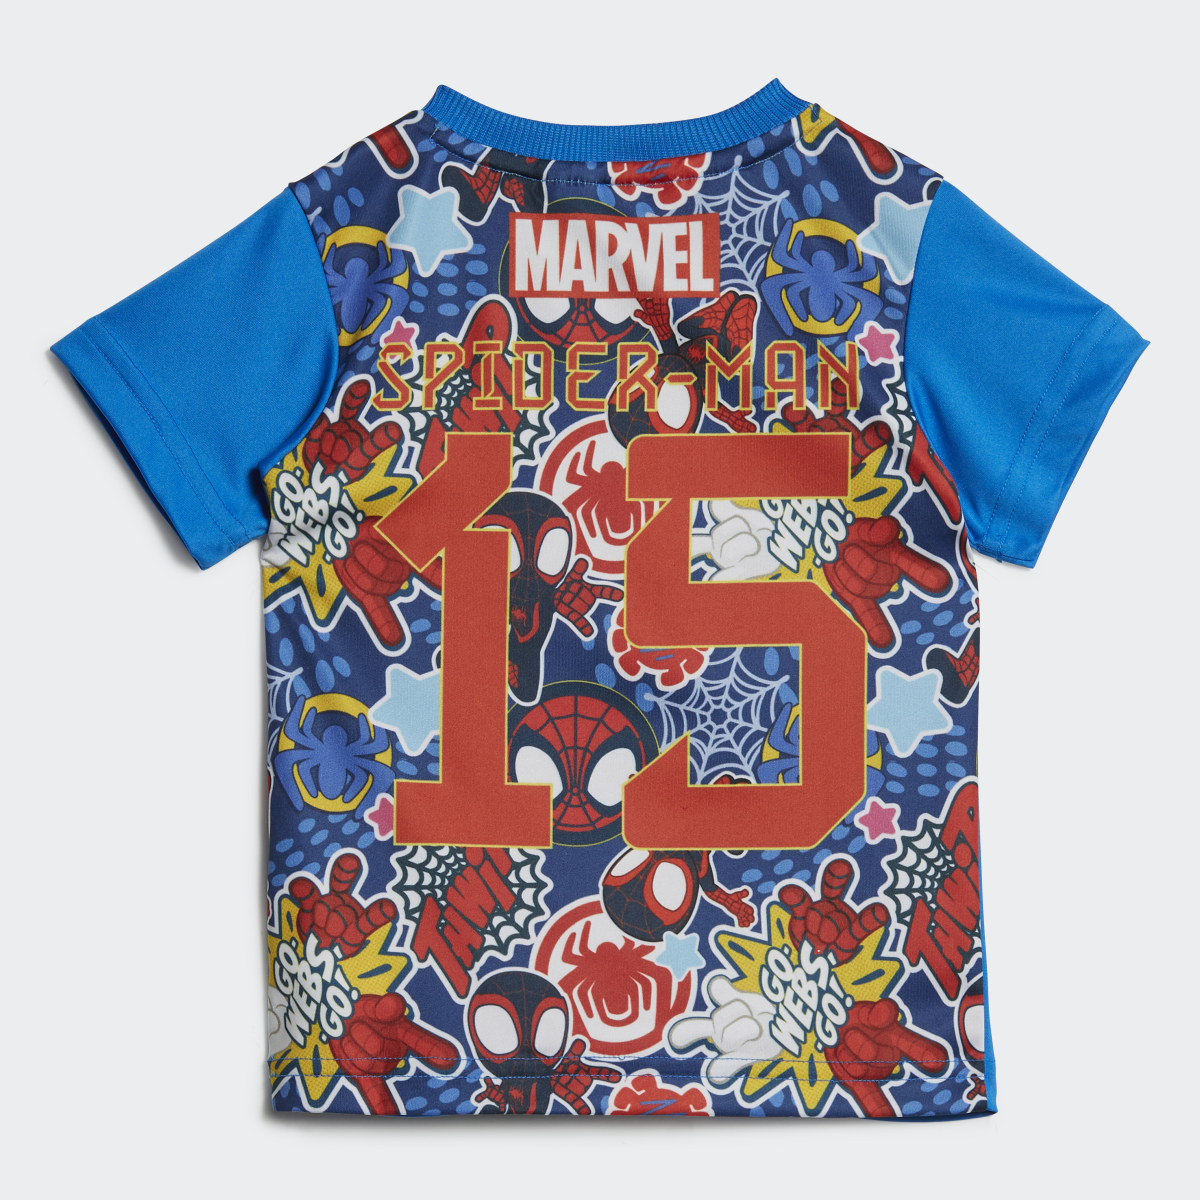 Adidas x Marvel's Spider-Man Summer Set. 4